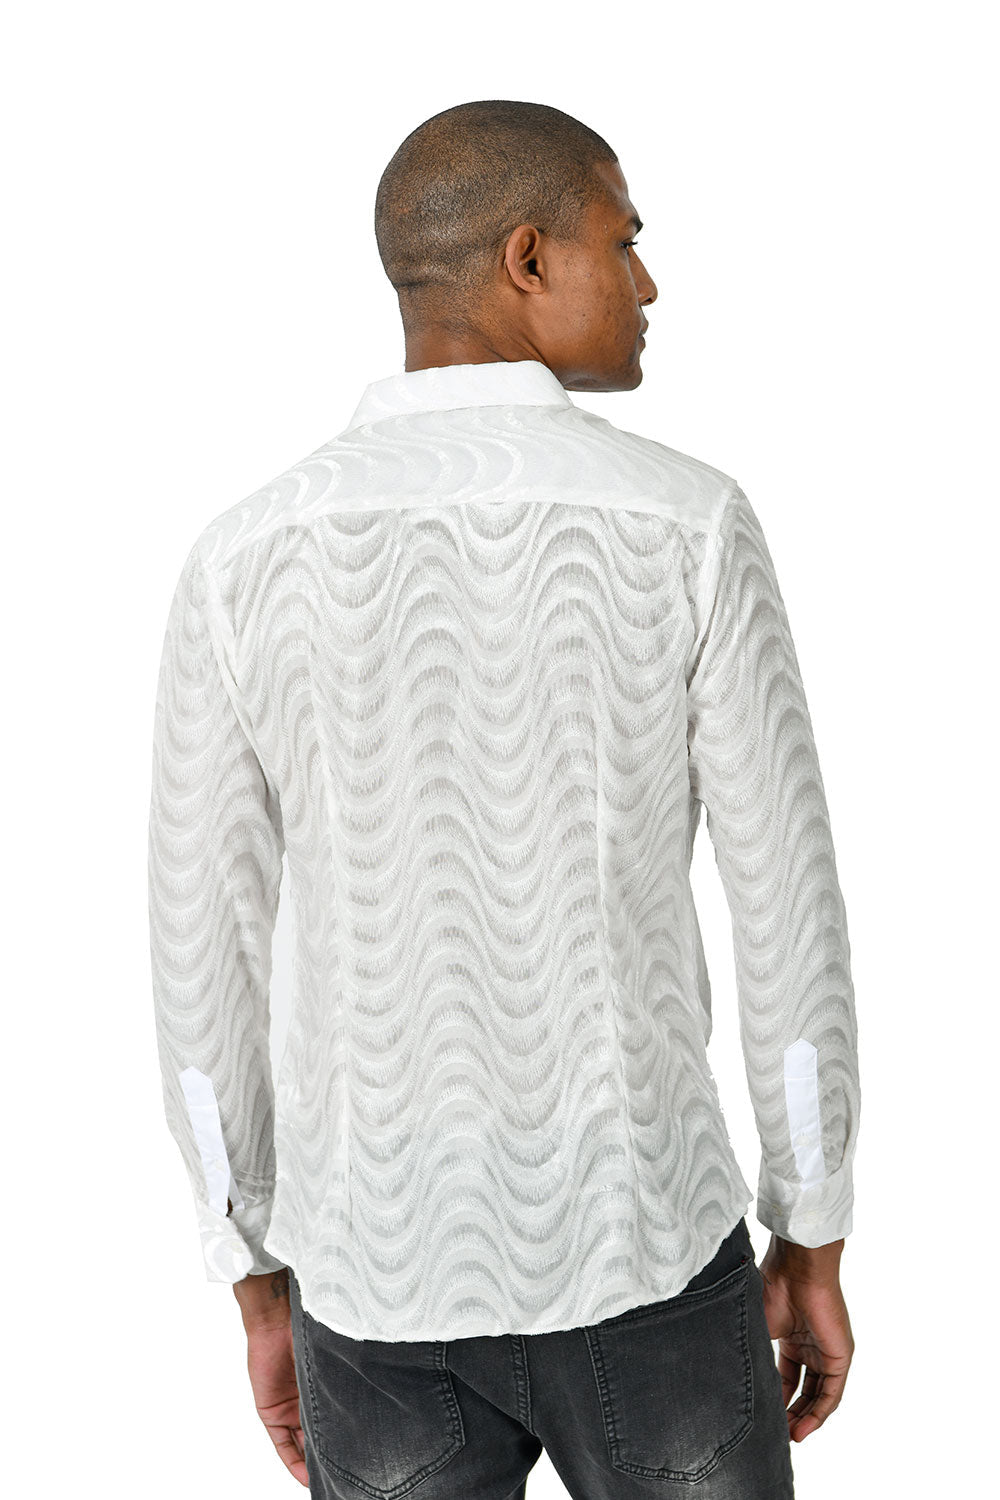  Barabas Men's Ocean Wave Print Button Down Long Sleeves Shirts B76 White